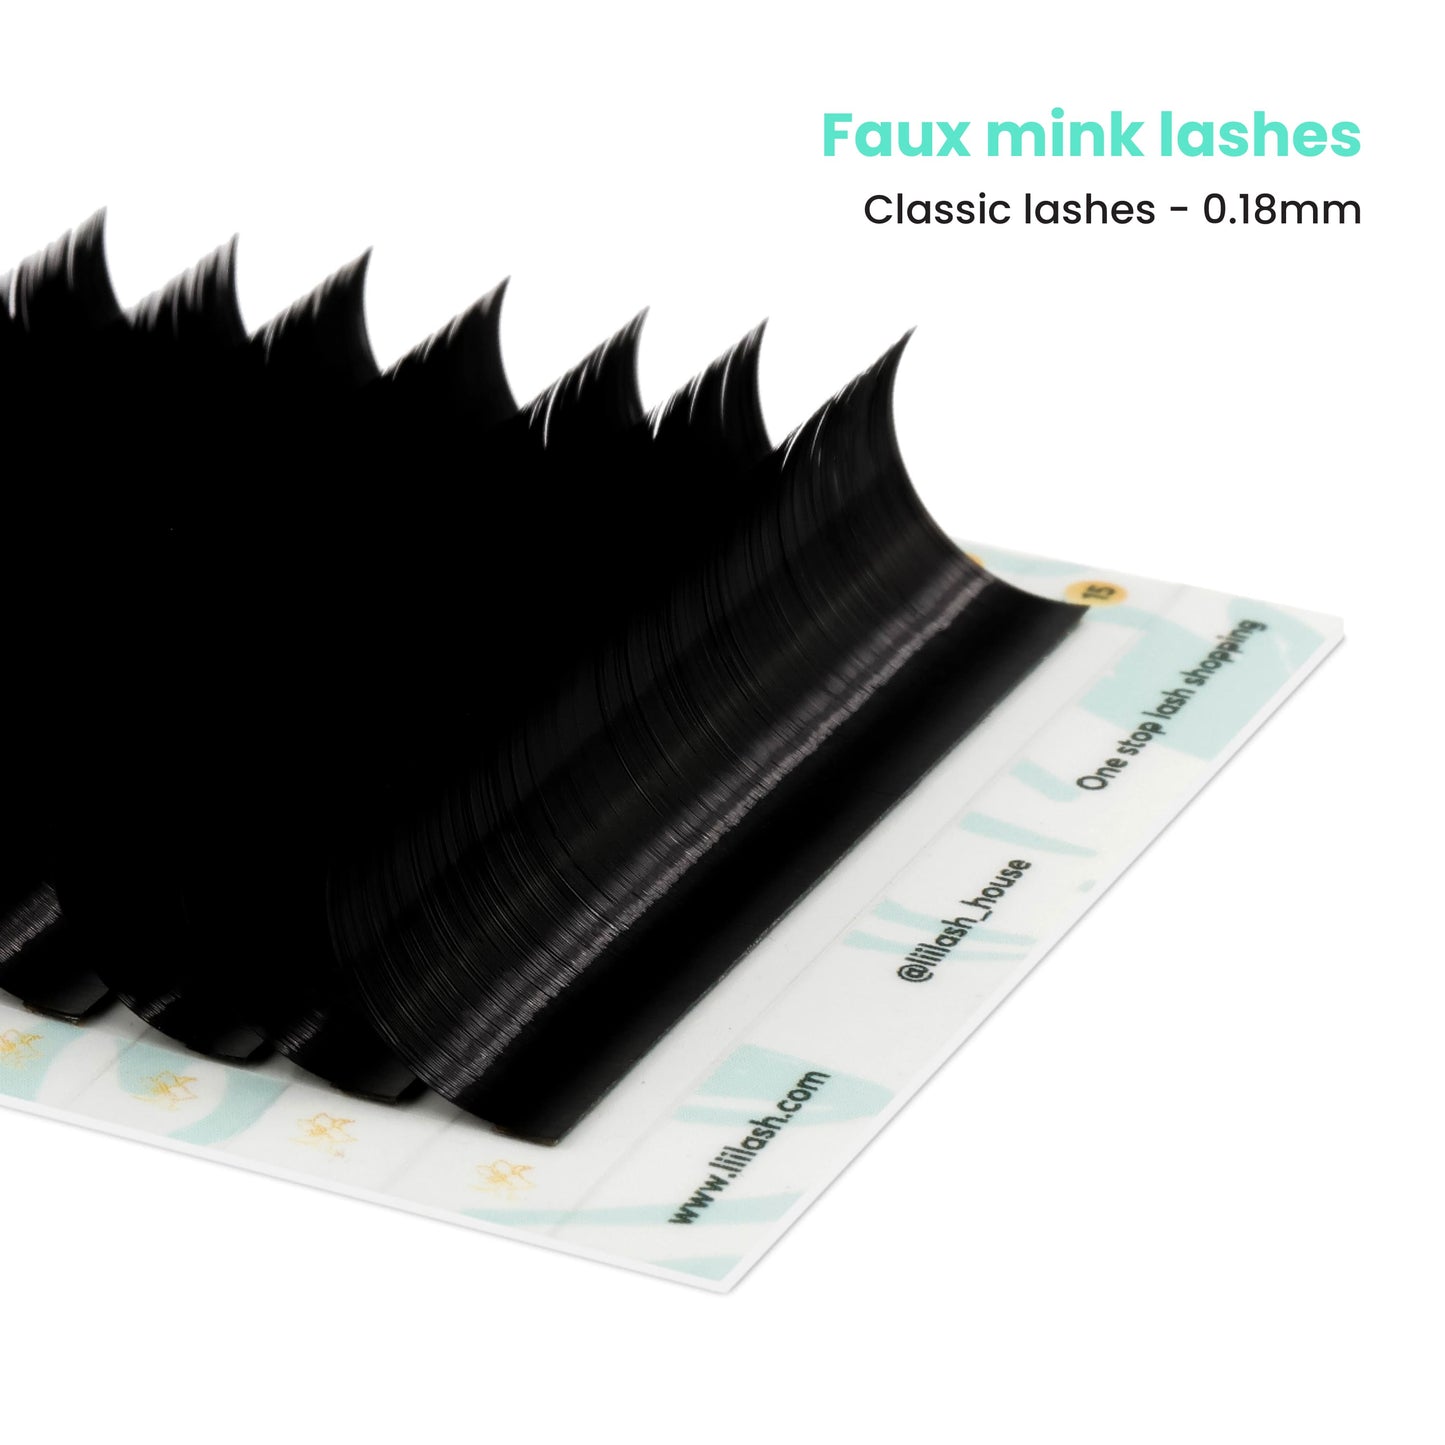 Faux Mink classic lashes 0.18mm